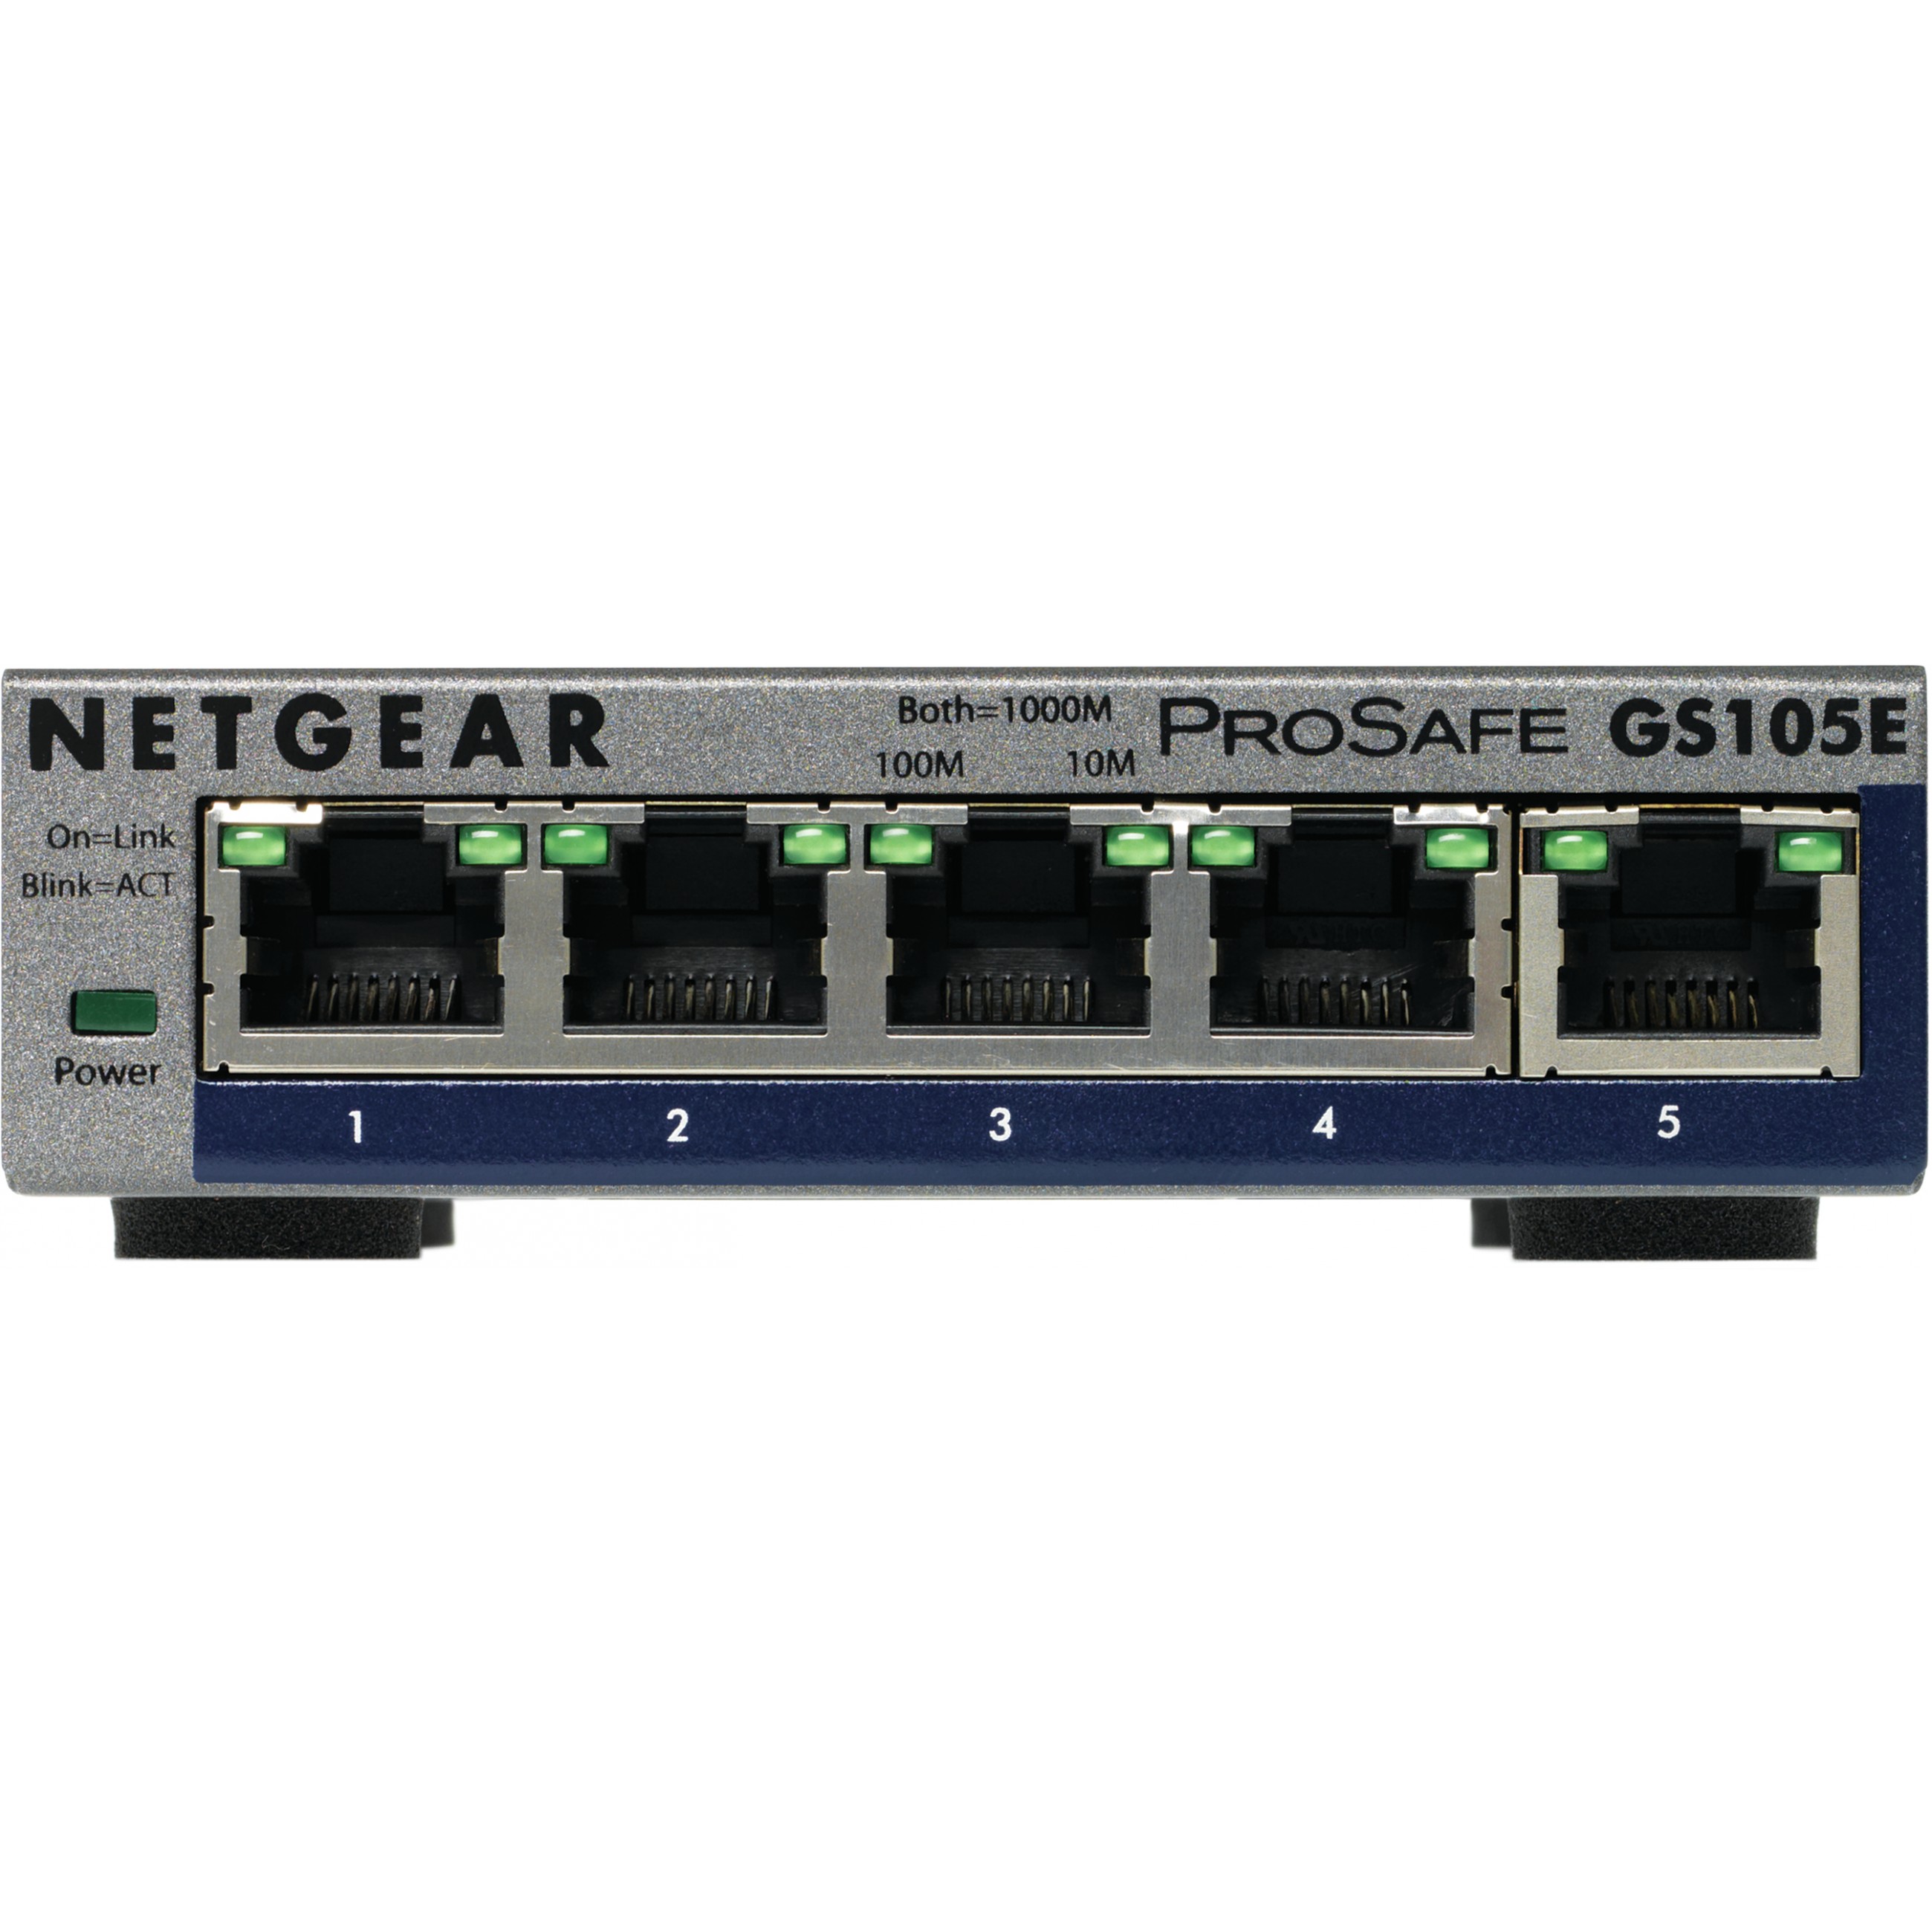 NETGEAR GS105E-200PES network switch